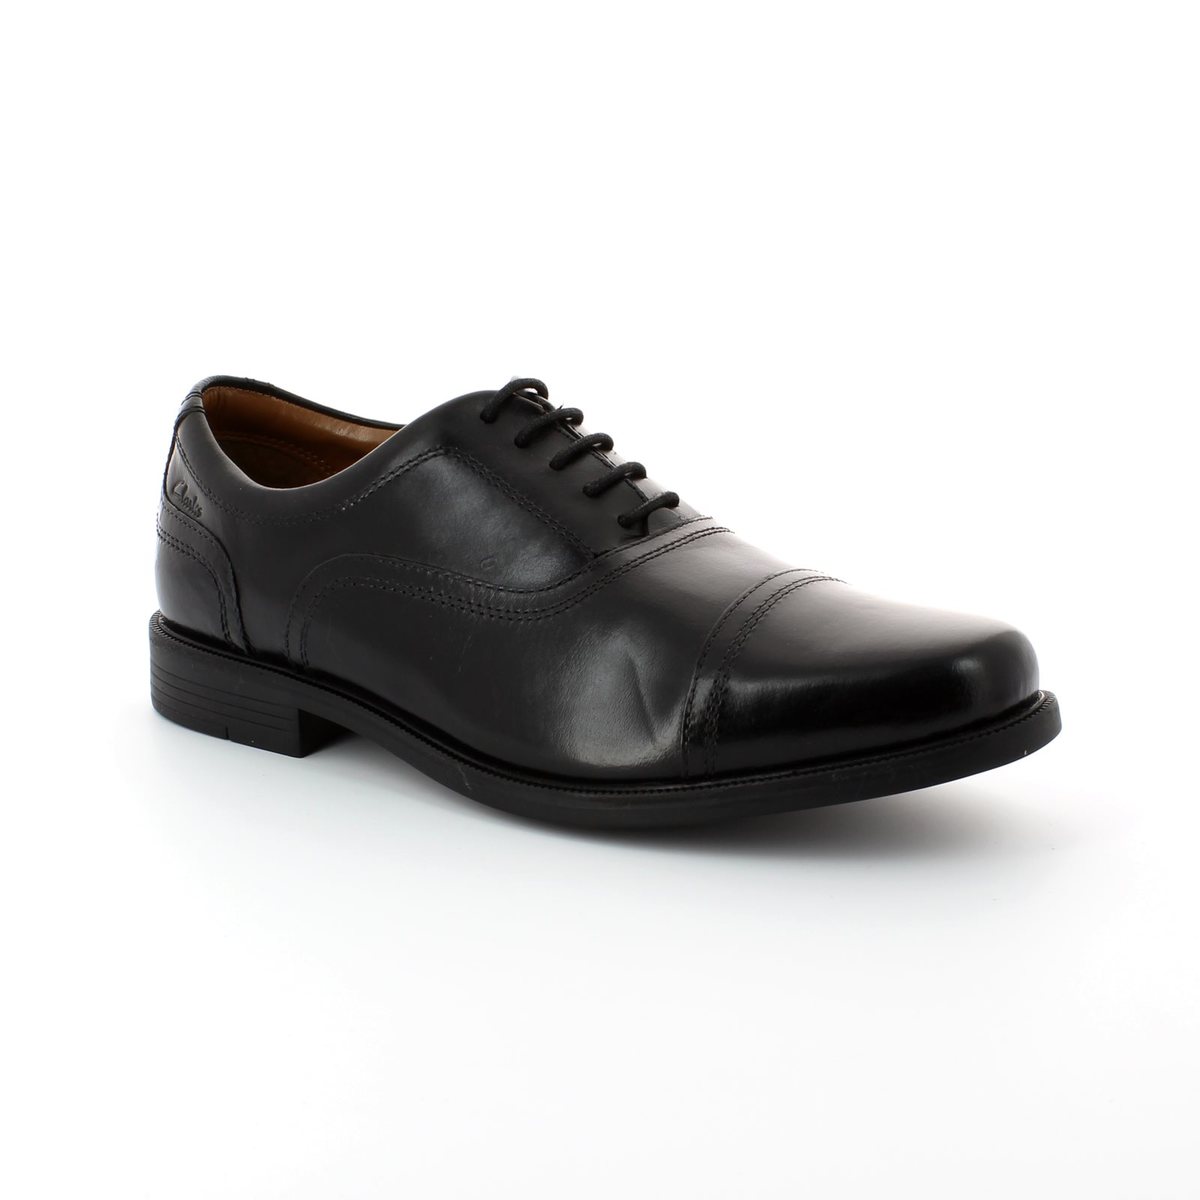 Clarks Beeston Cap G Fit Black formal shoes